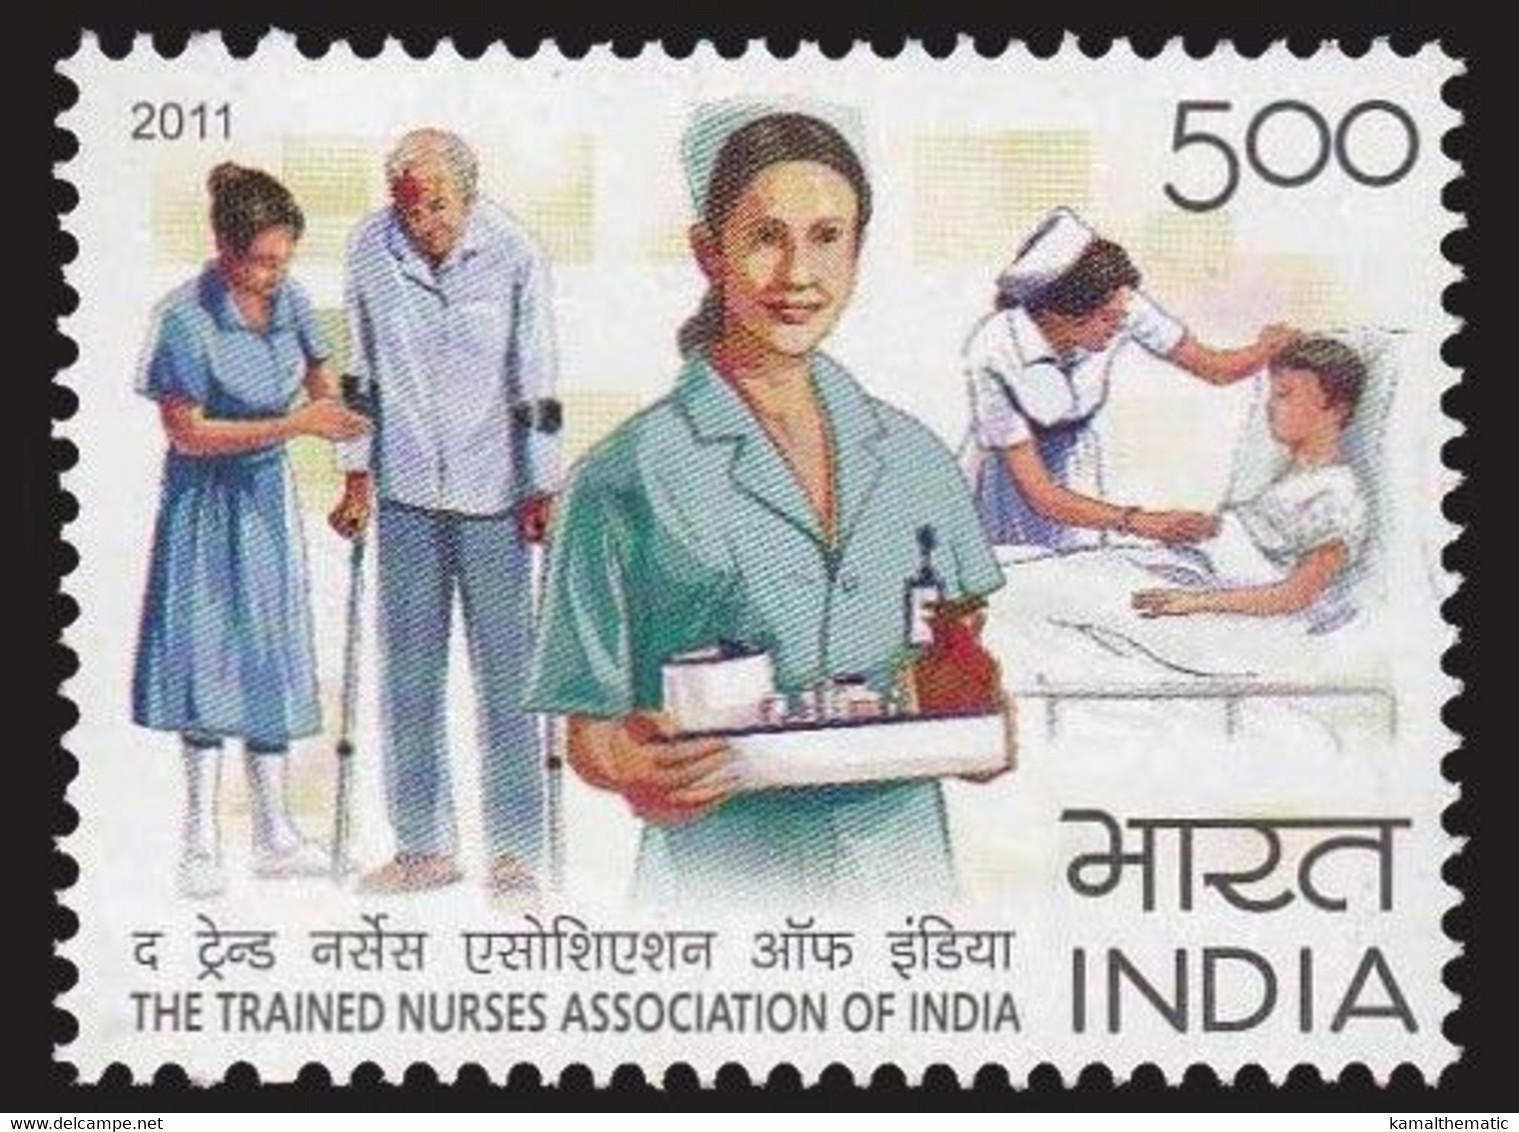 India 2011 MNH 1v, Nurse, Medicine, Health, Crutches, Old Age - First Aid